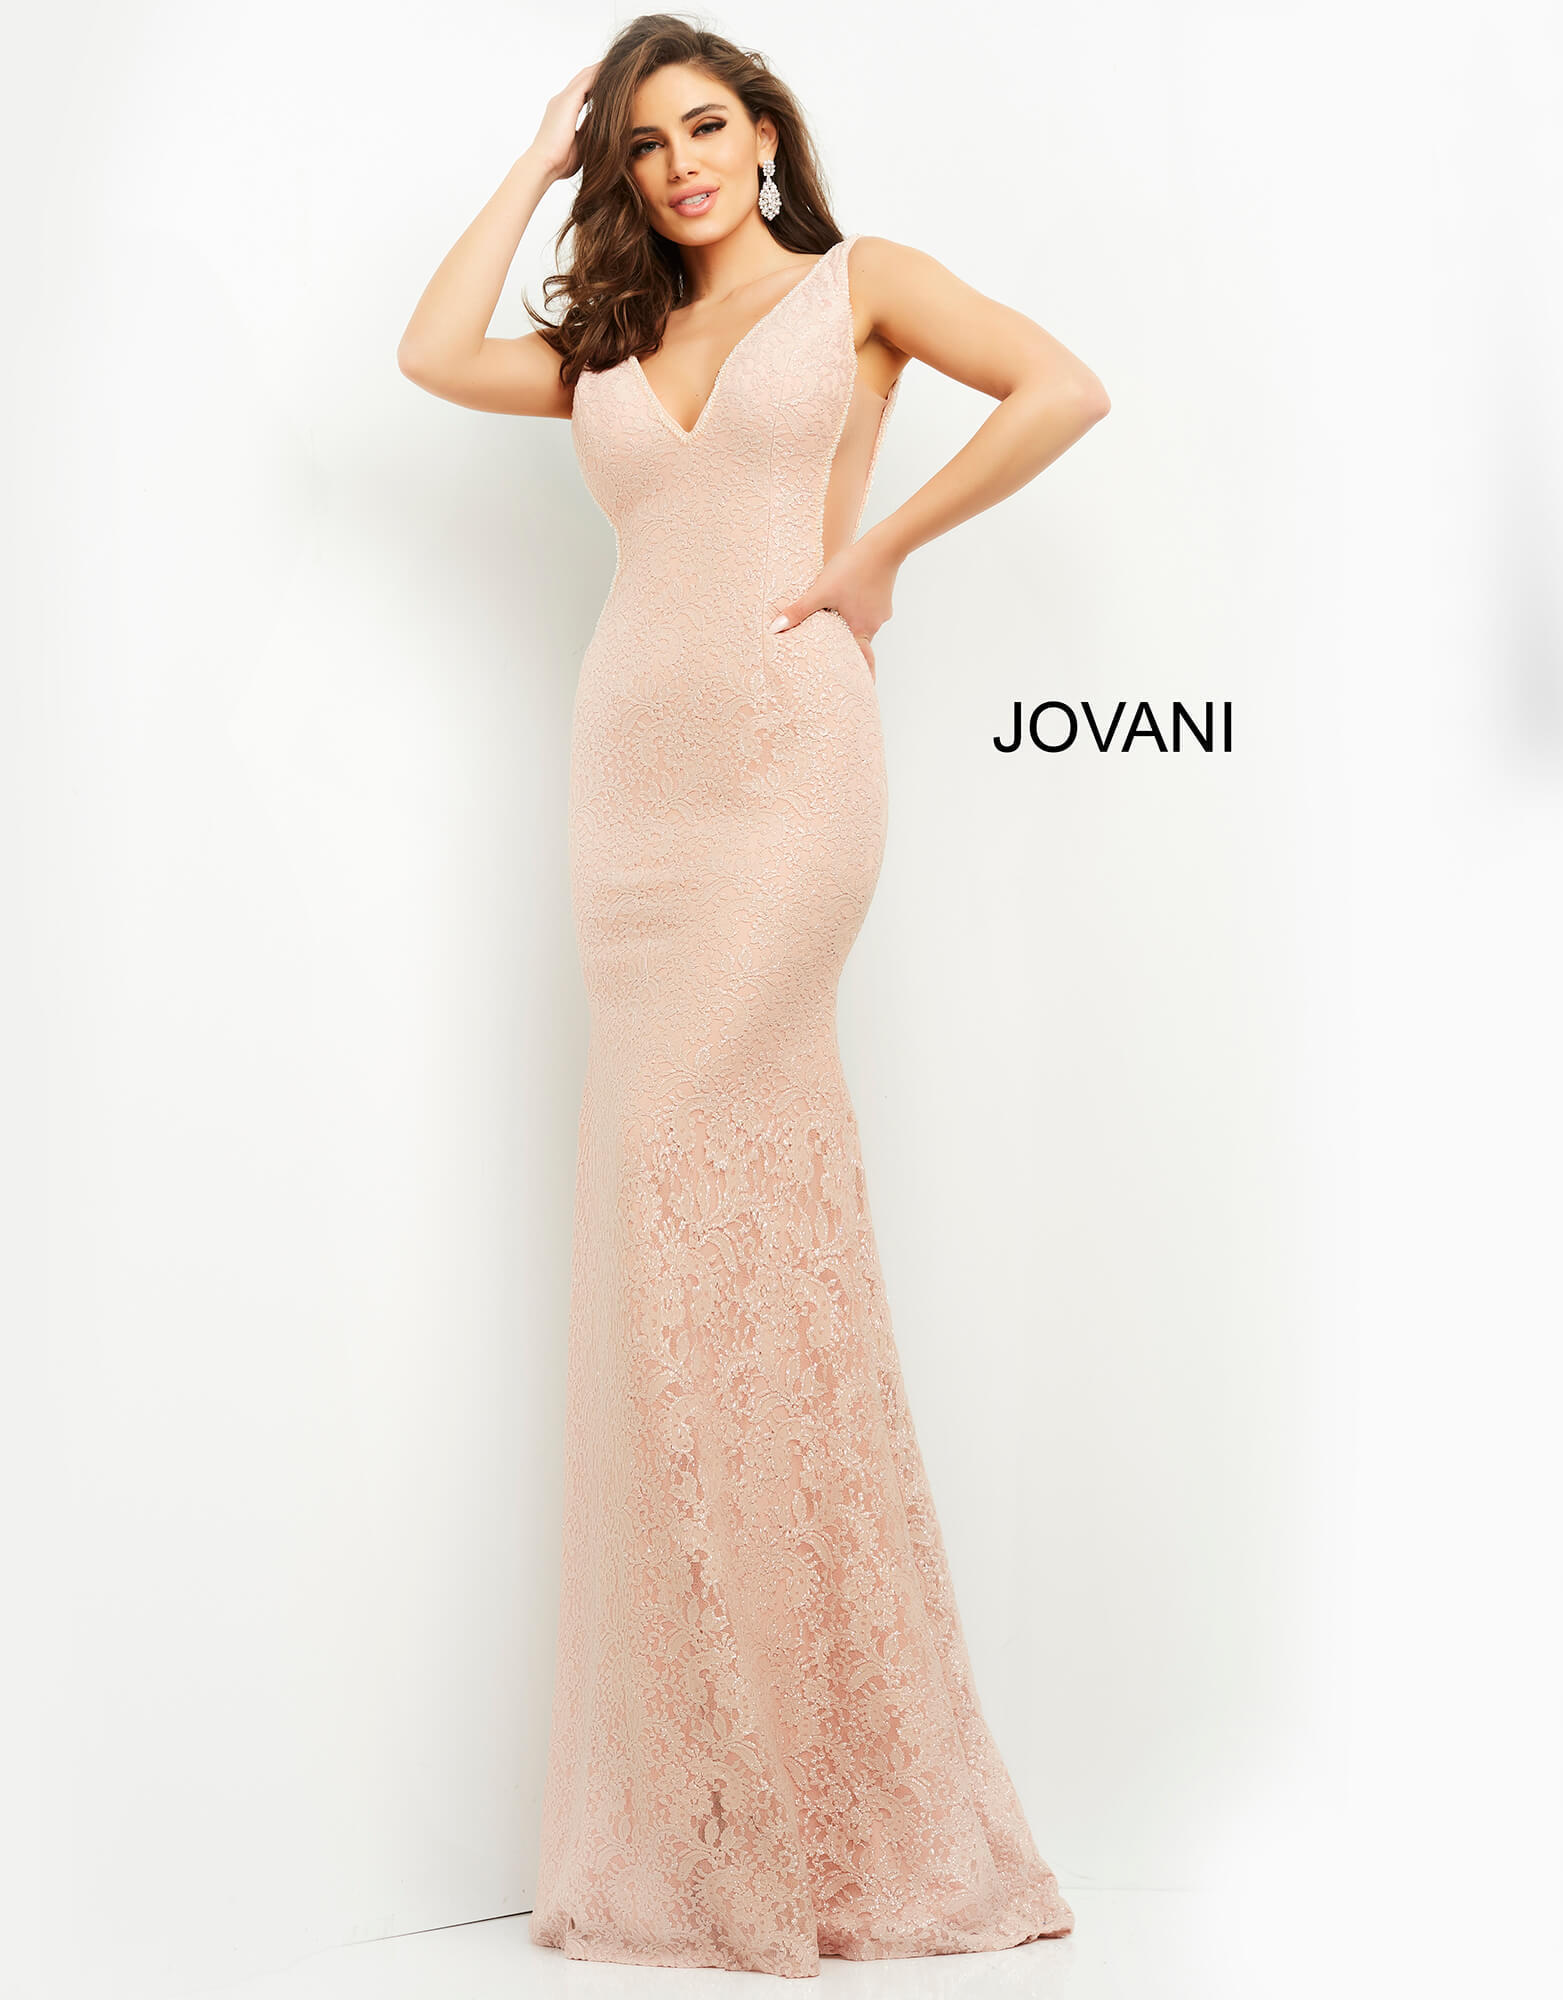 Jovani 04885 | Blush Long Fitted V Neck Prom Dress